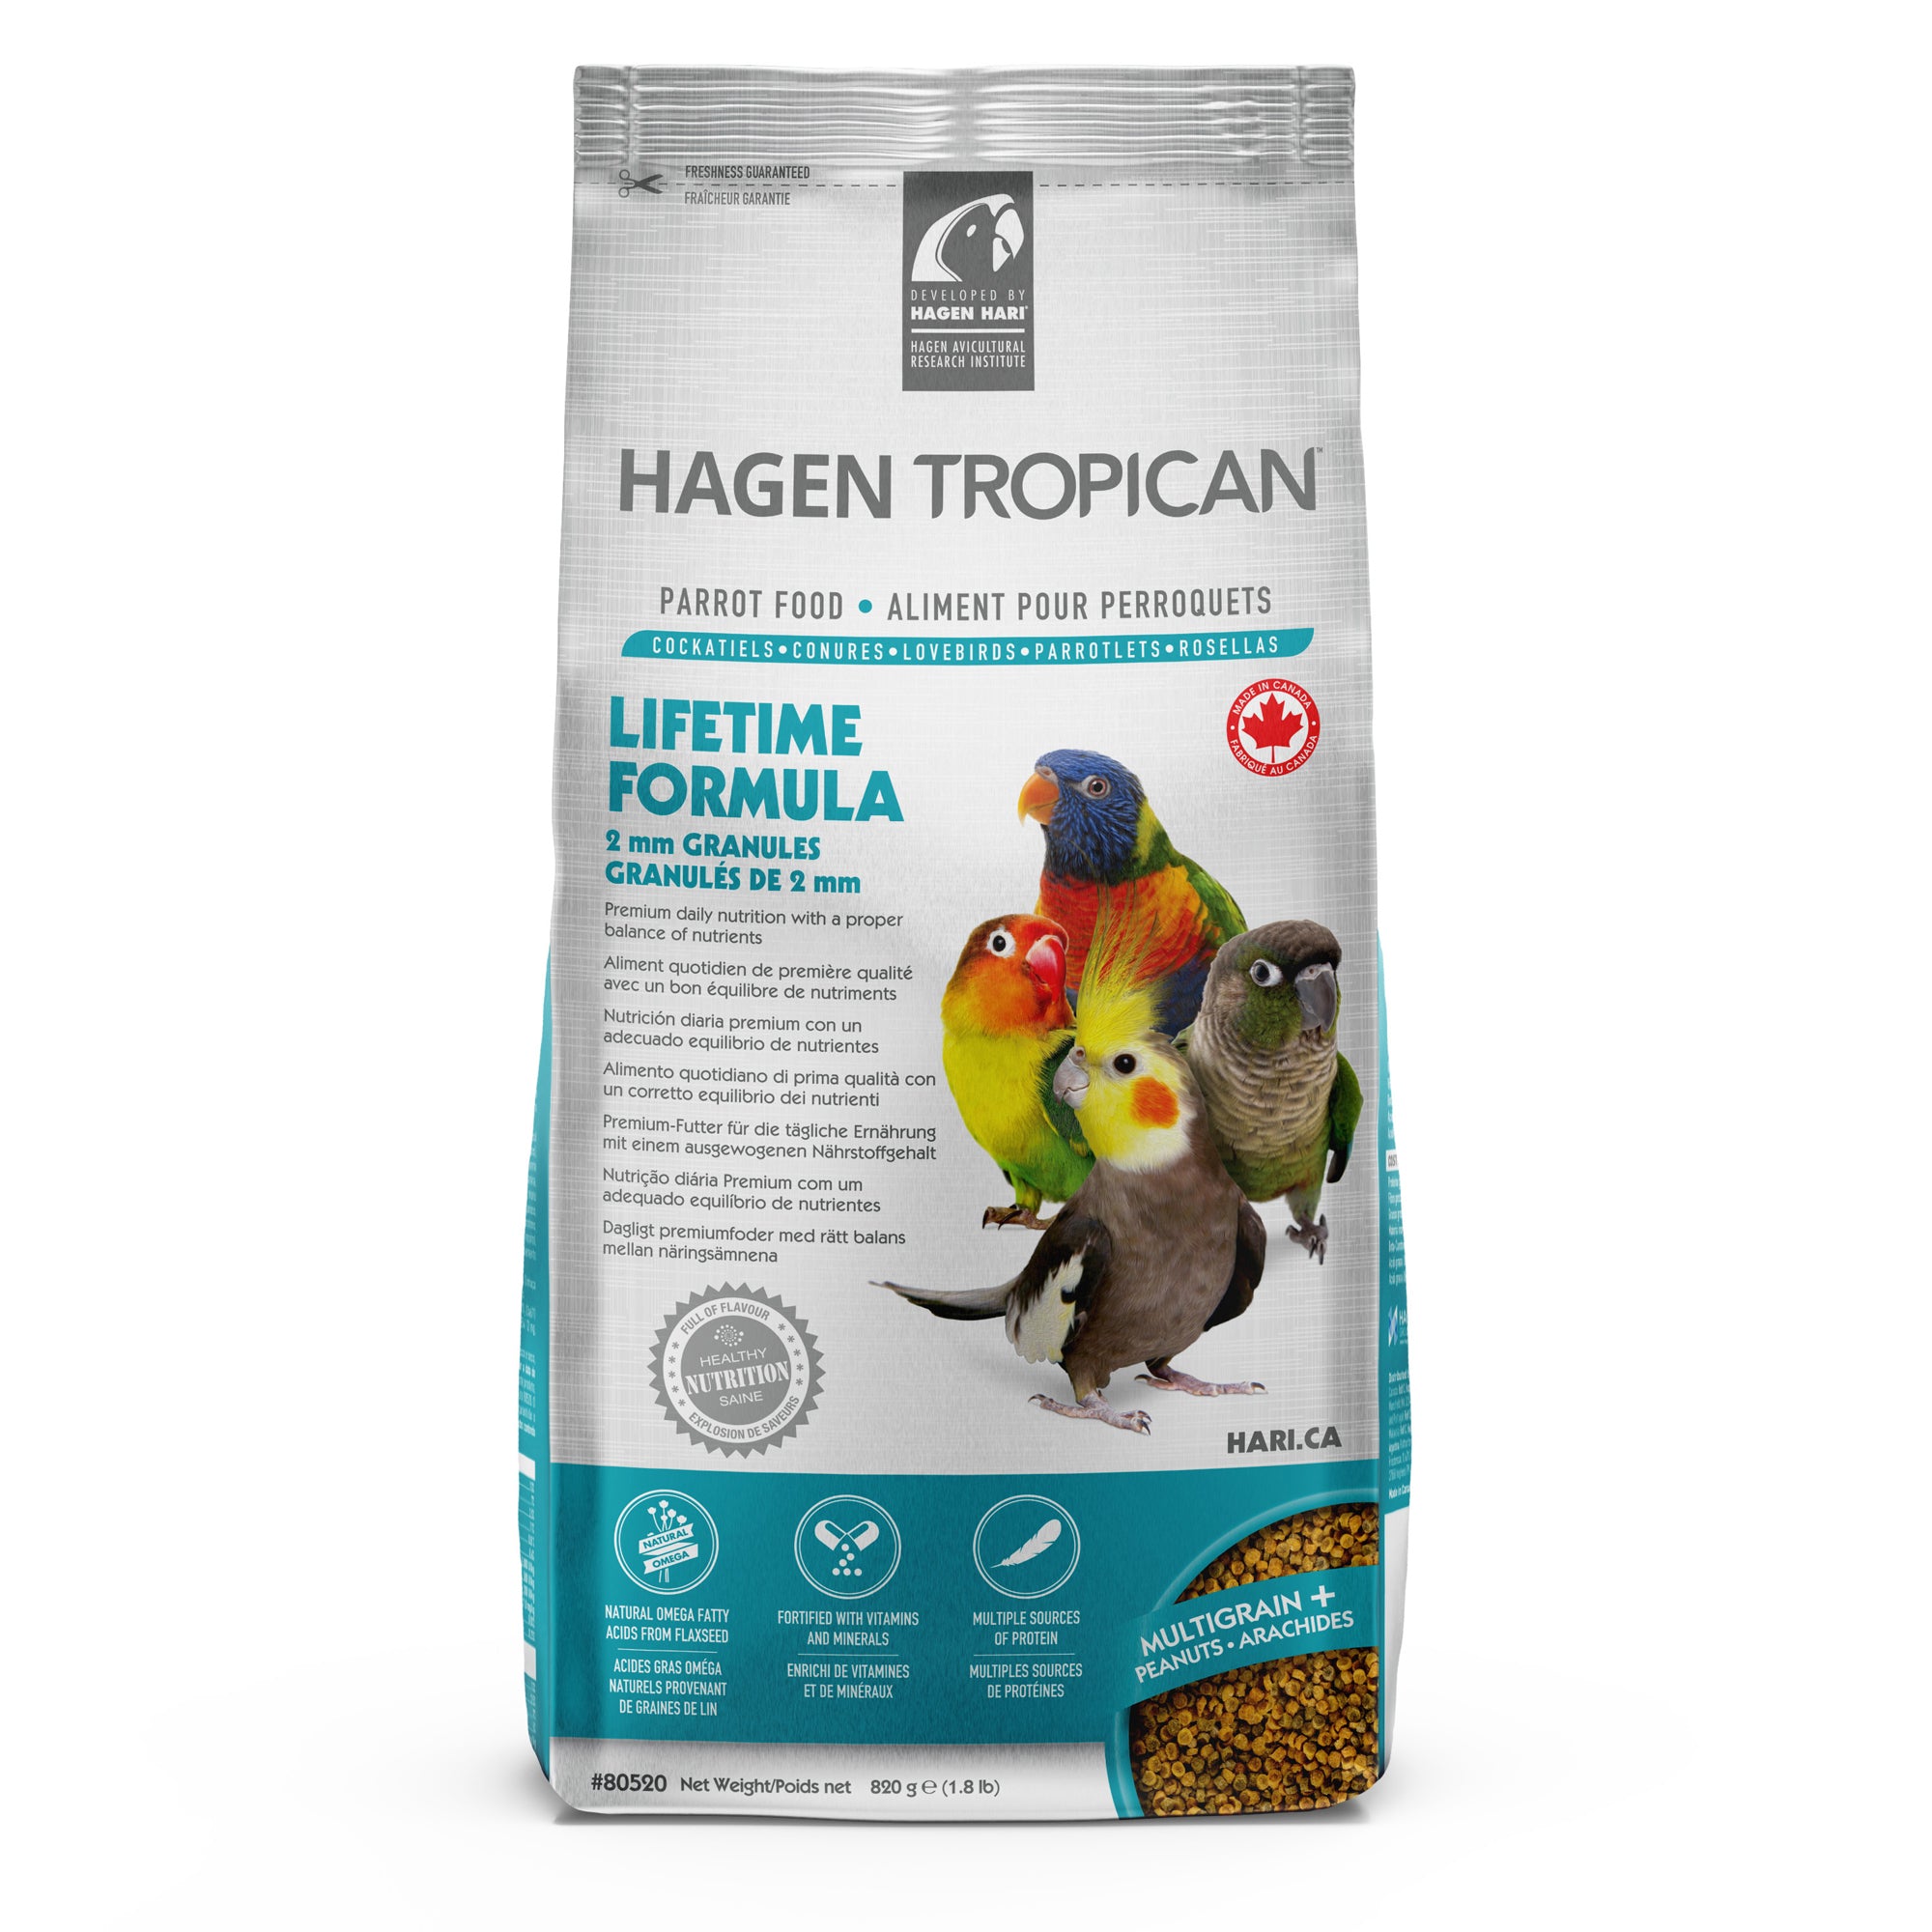 Hagen Hari Tropican Parrot Lifetime Granules 4mm 3 Sizes